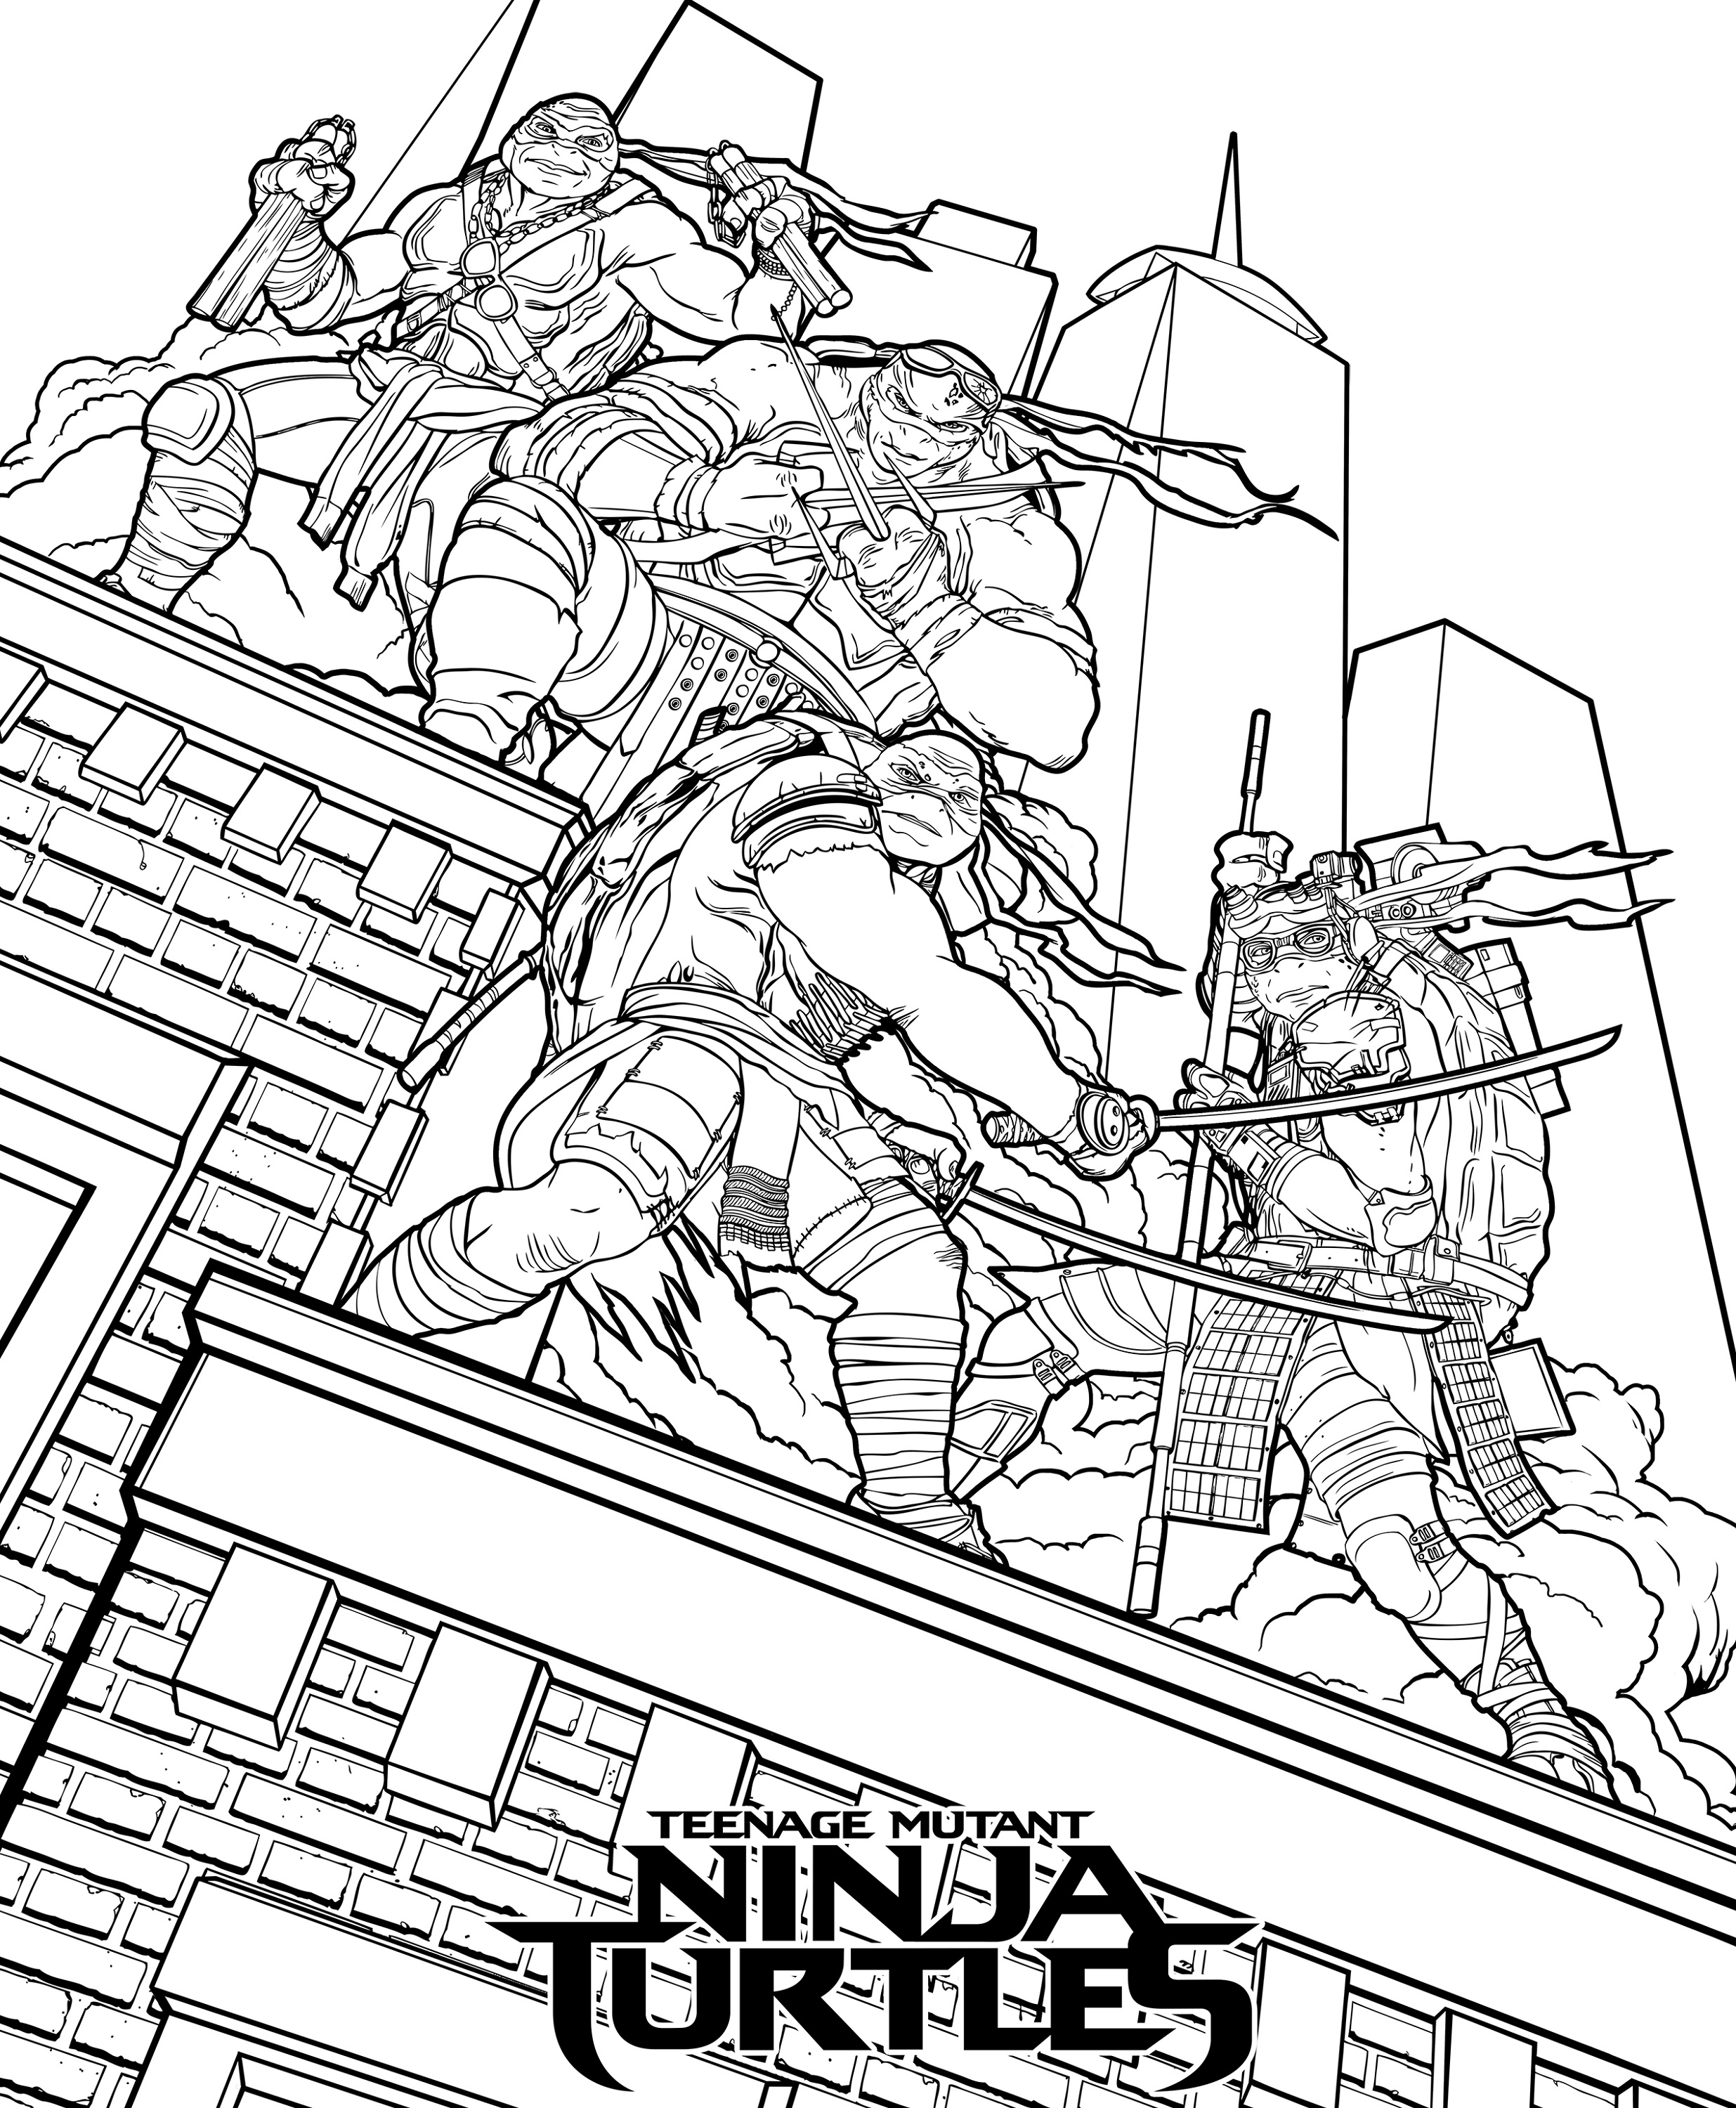 Teenage Mutant Ninja Turtles Coloring Pages To Print